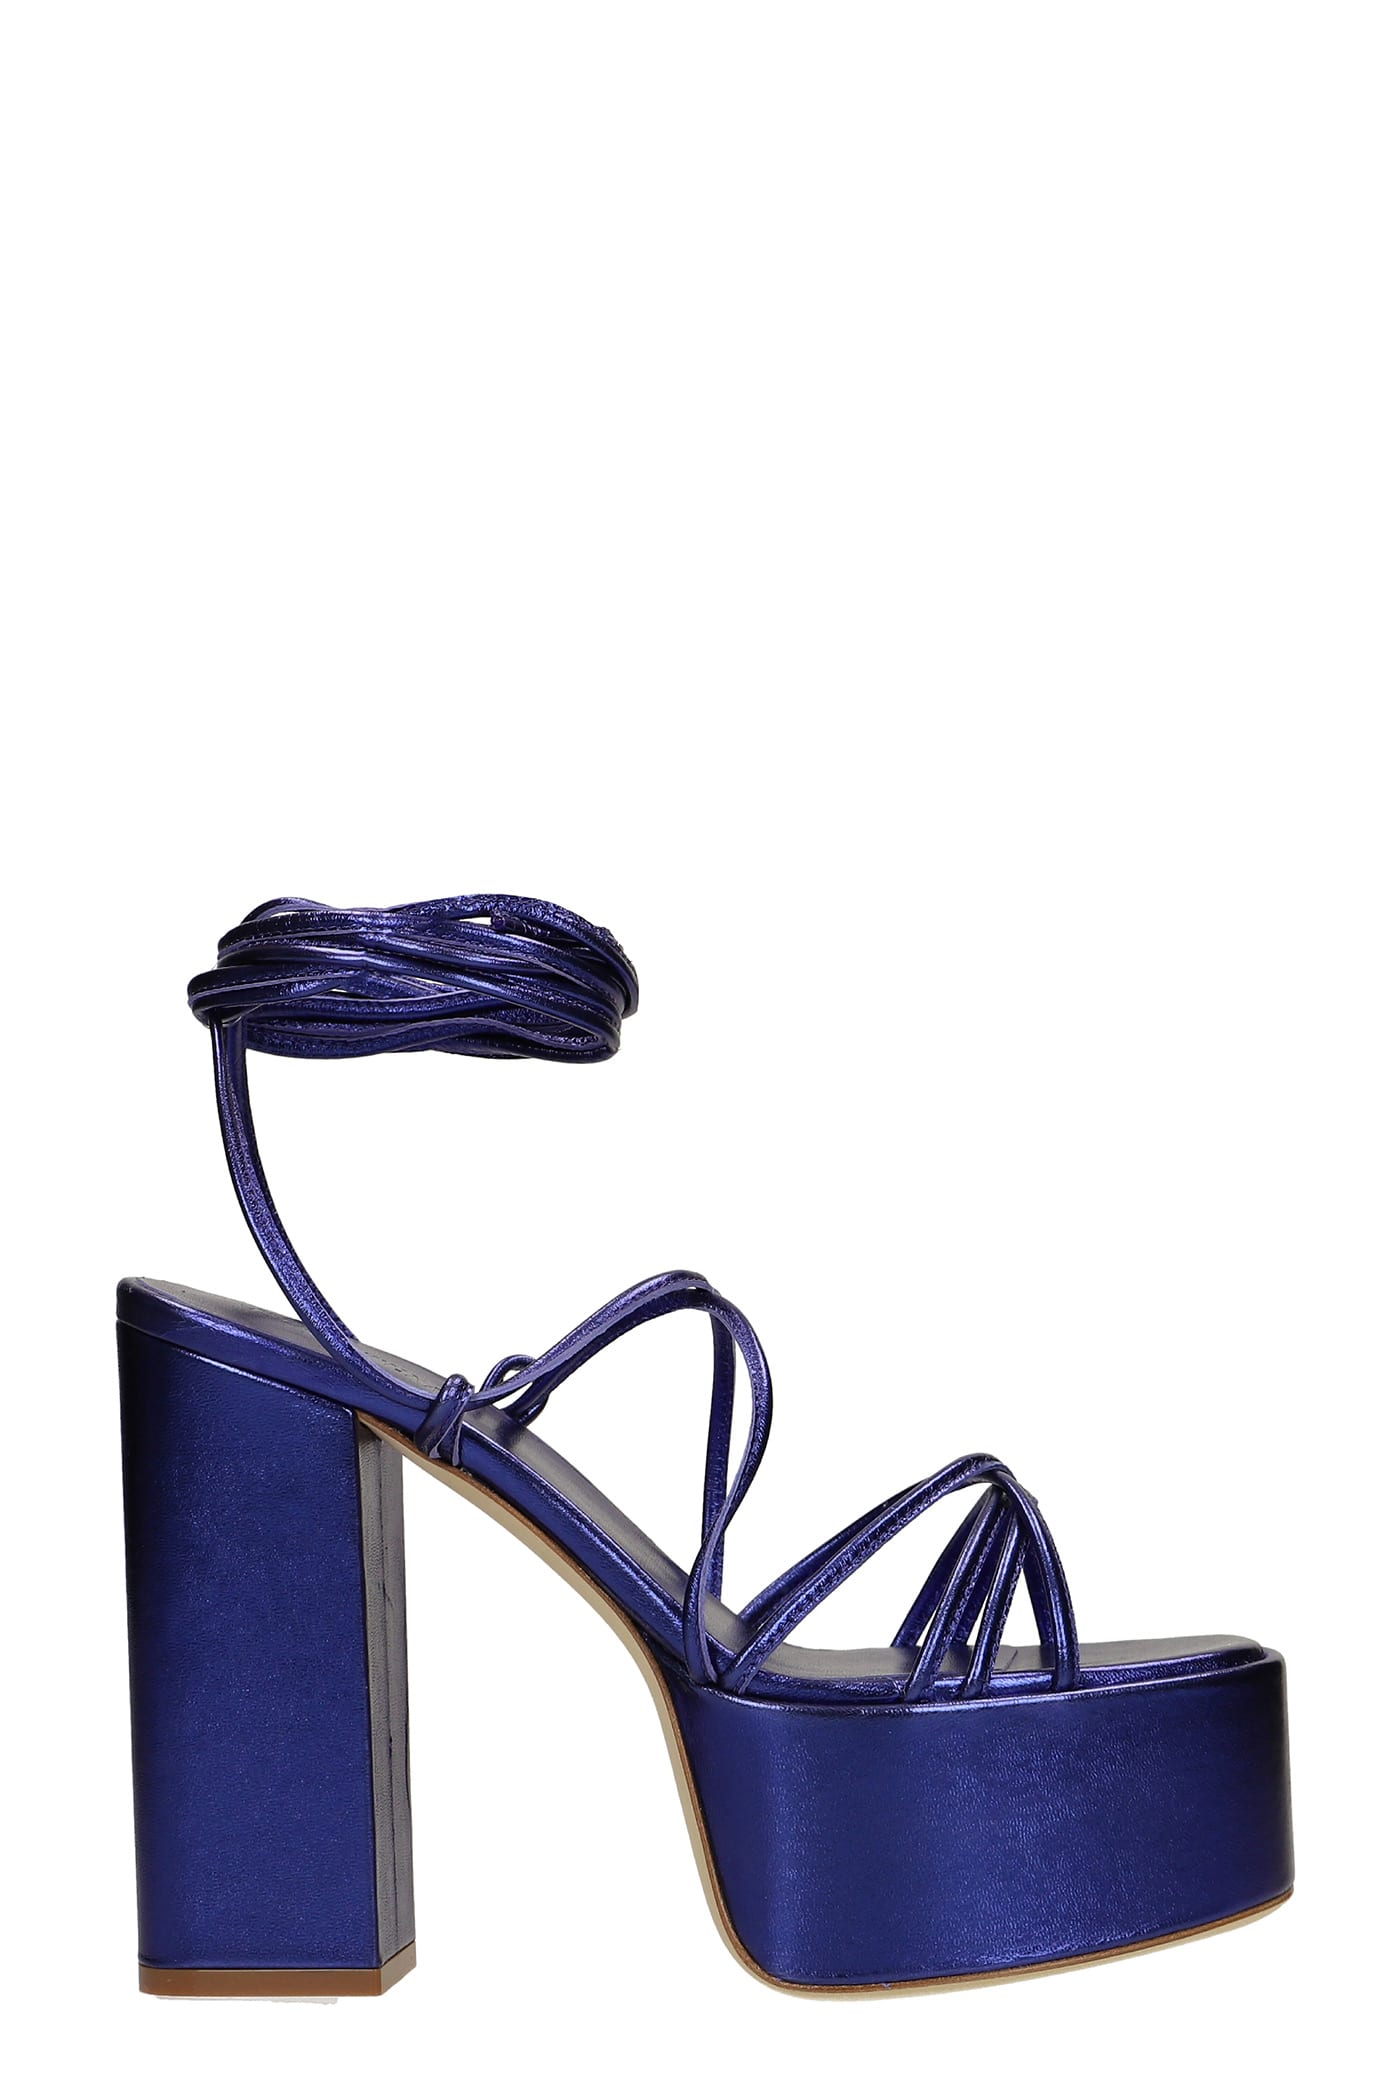 Paris Texas Malena Sandals In Viola Leather